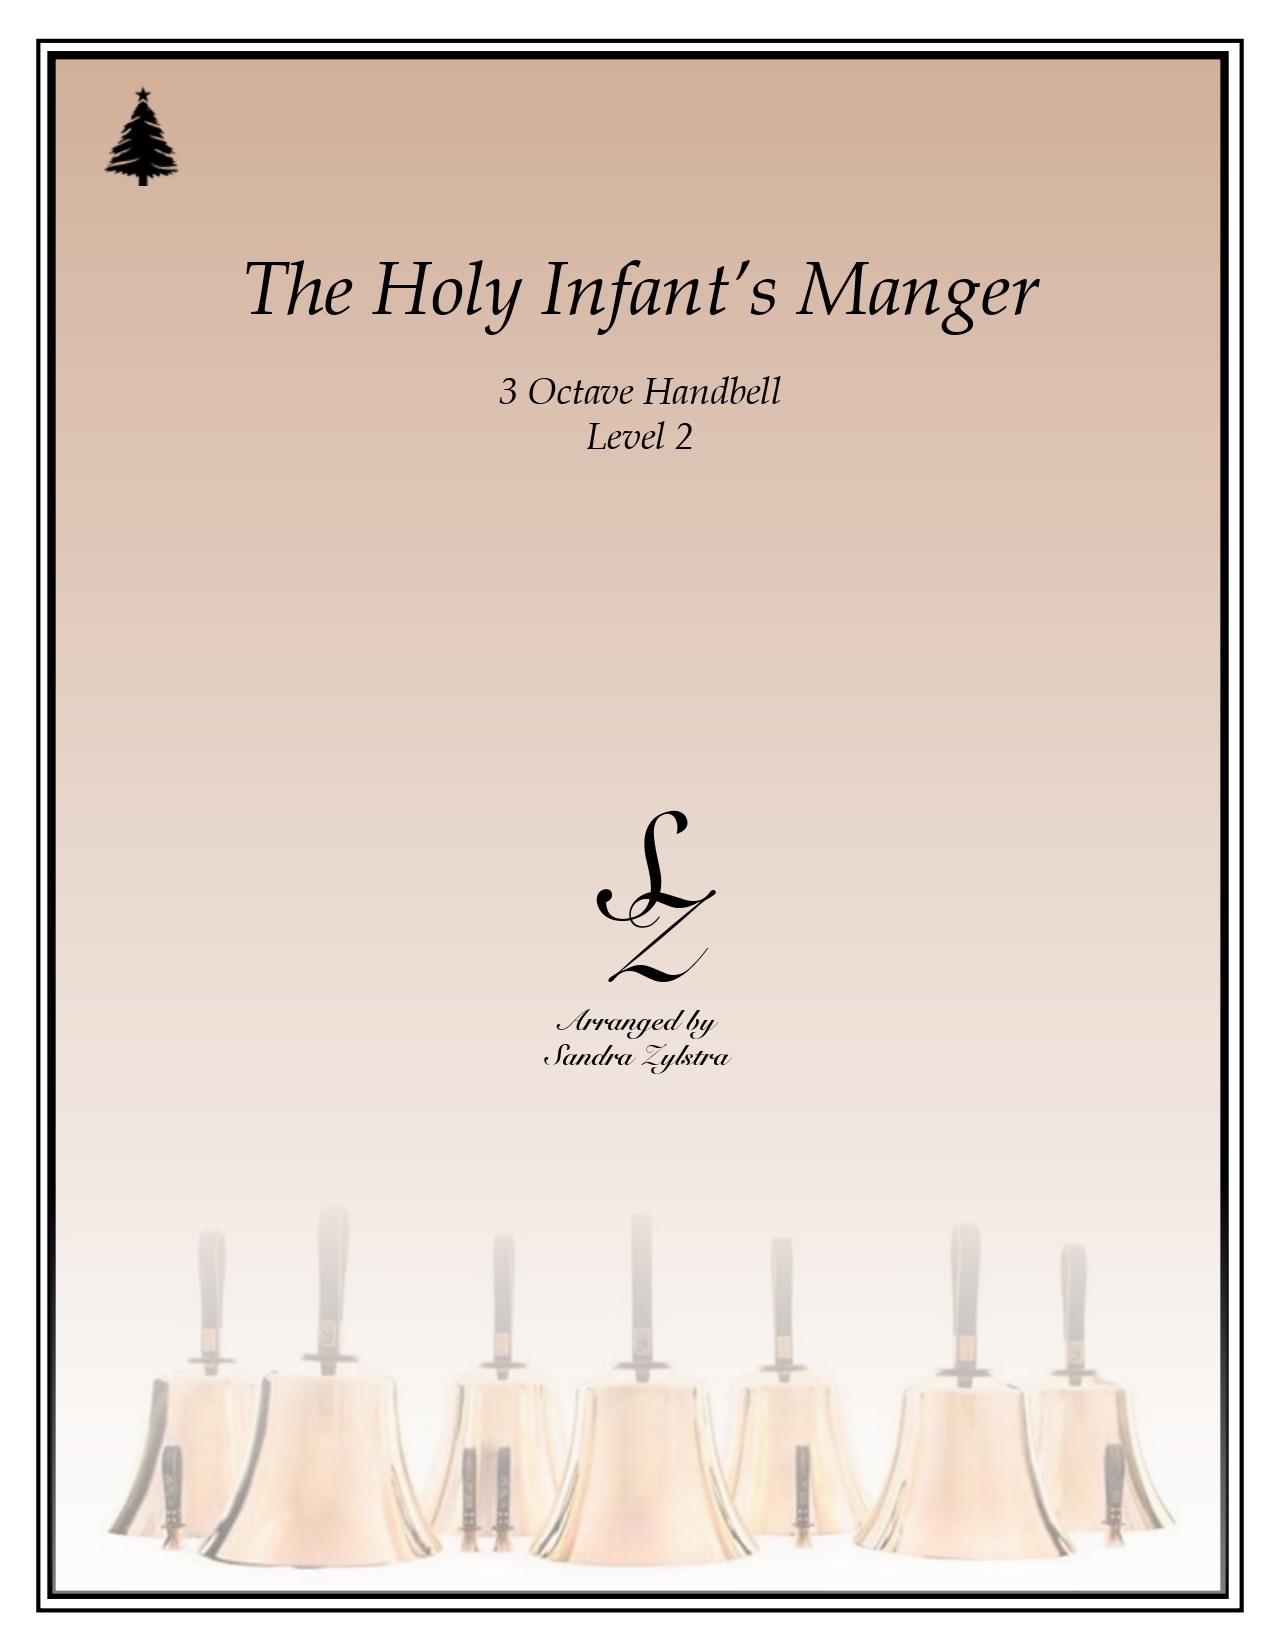 The Holy Infants Manger 3 octave handbells cover page 00011